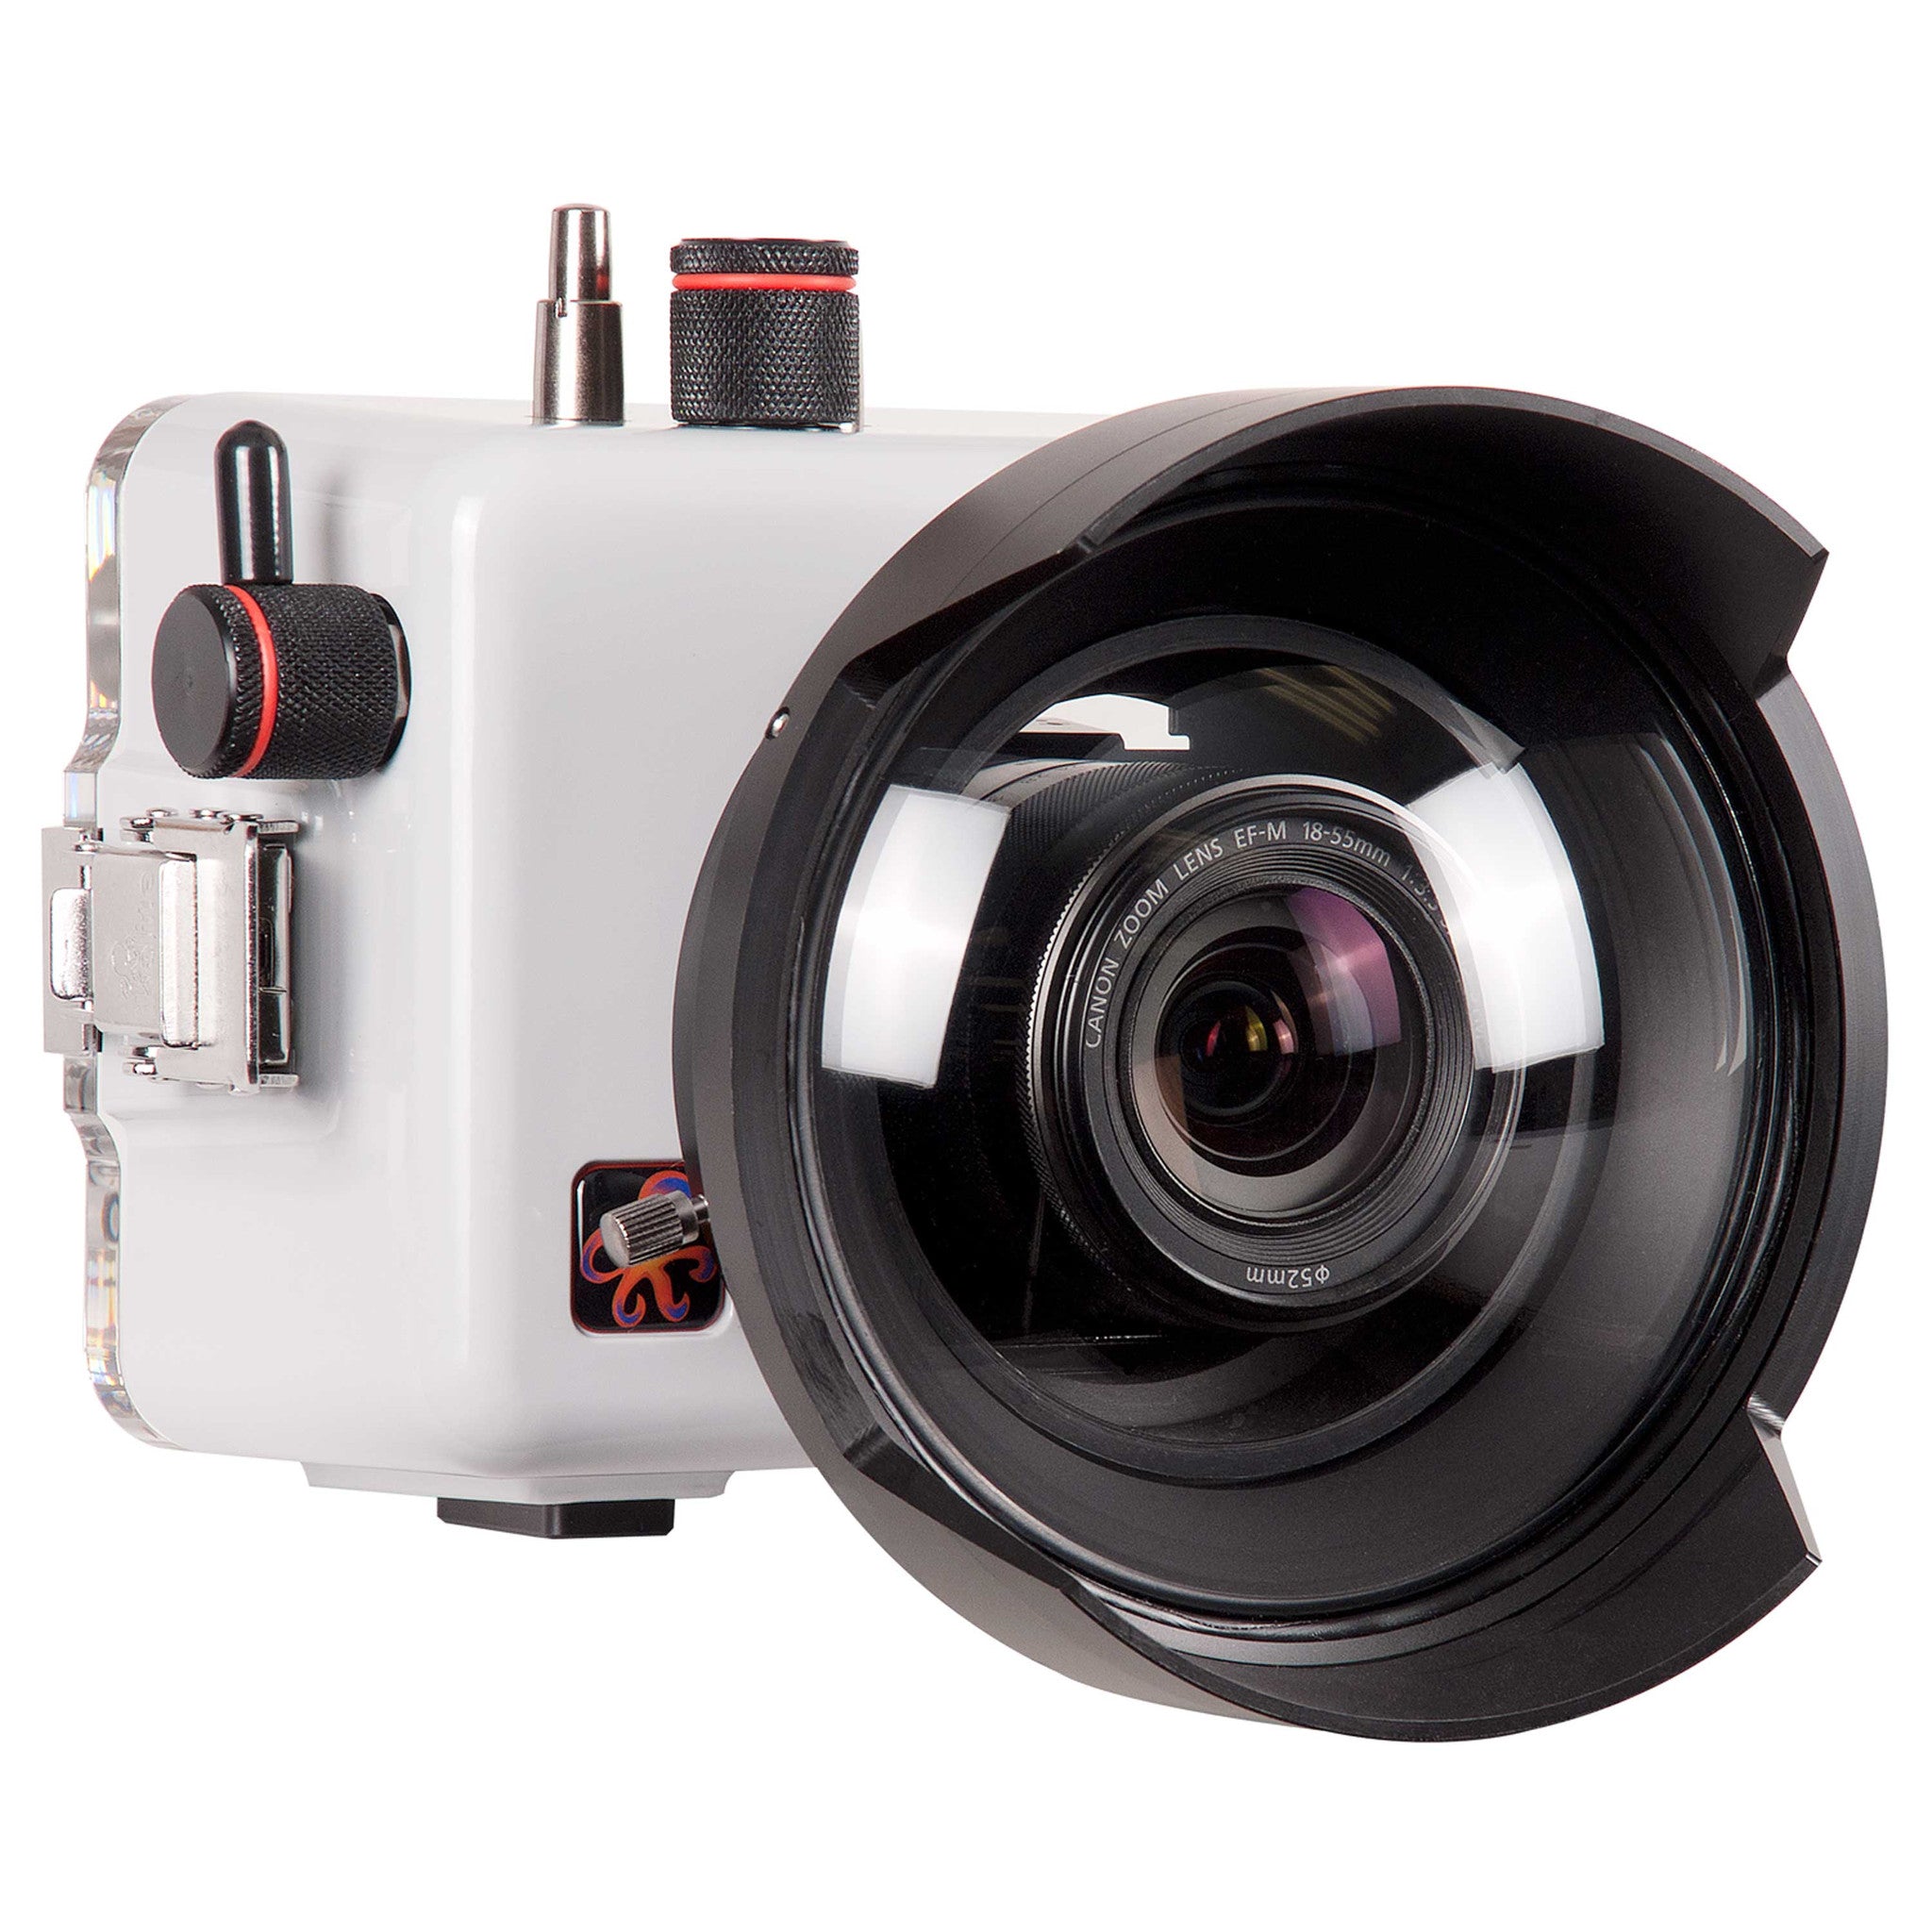 200DLM/A Underwater Housing for Canon EOS M10 Mirrorless Cameras